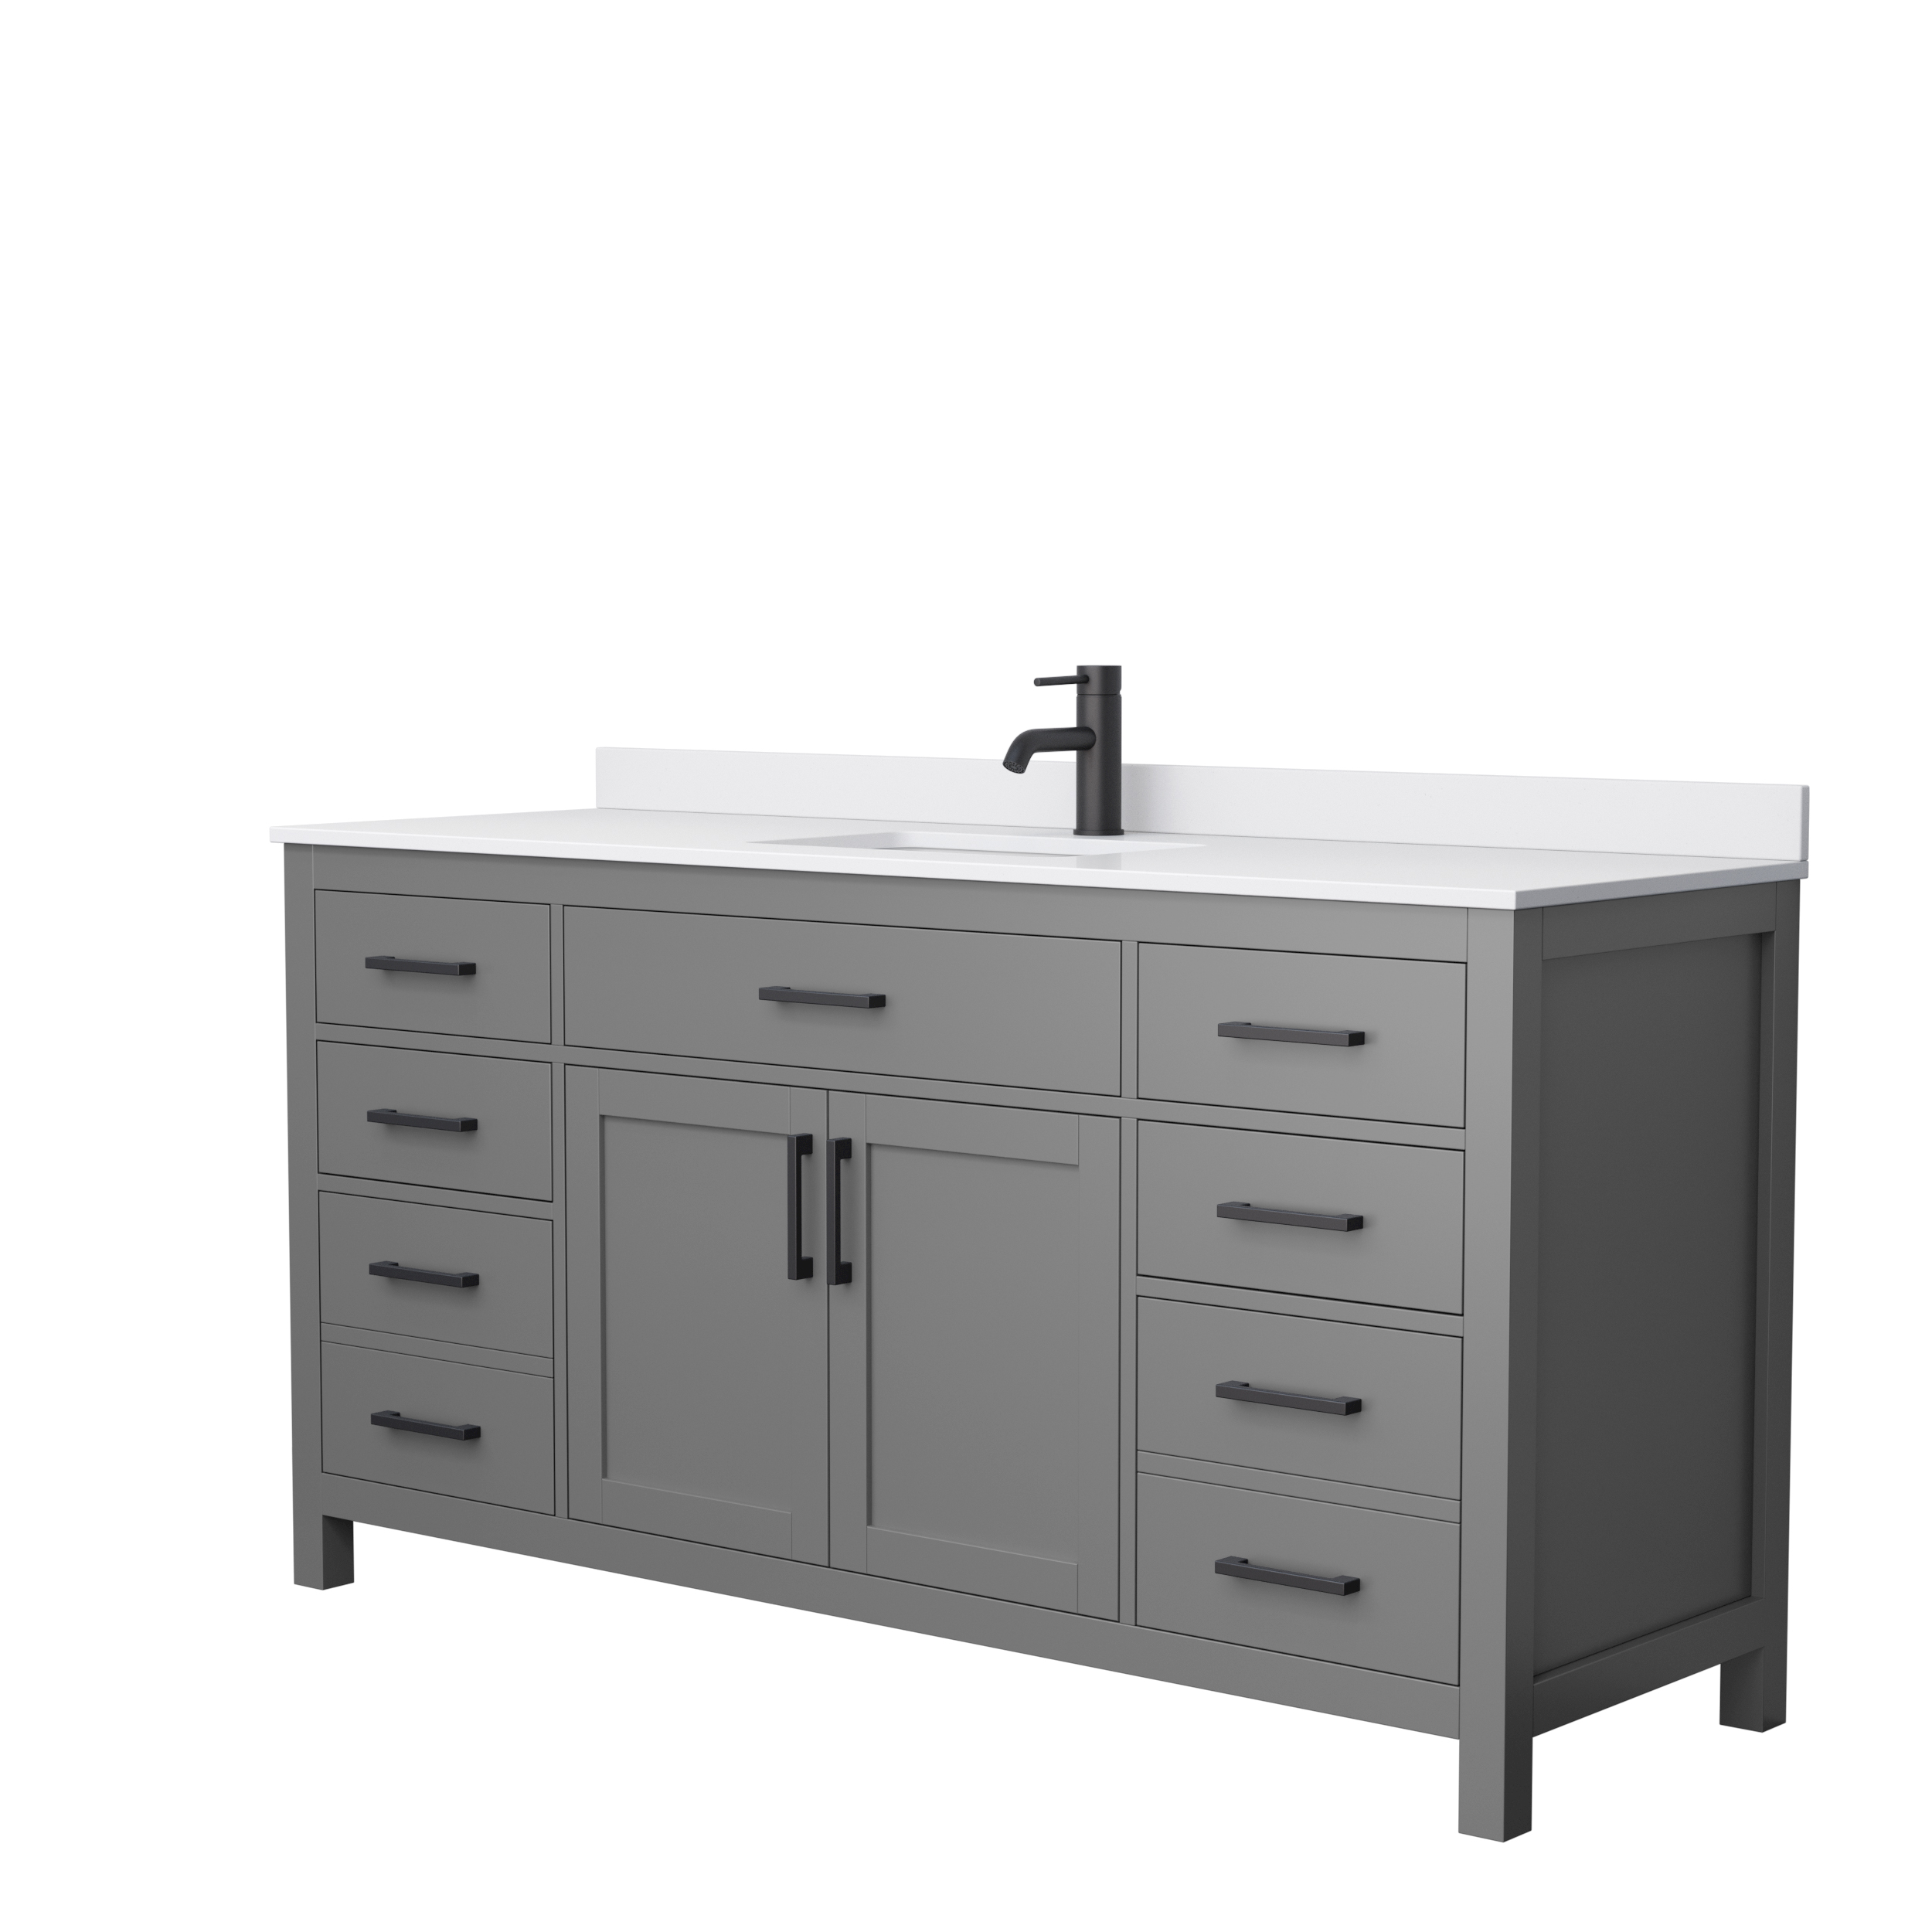 66" Single Bathroom Vanity in Dark Gray, Carrara Cultured Marble Countertop, Undermount Square Sink, Brushed Gold Trim